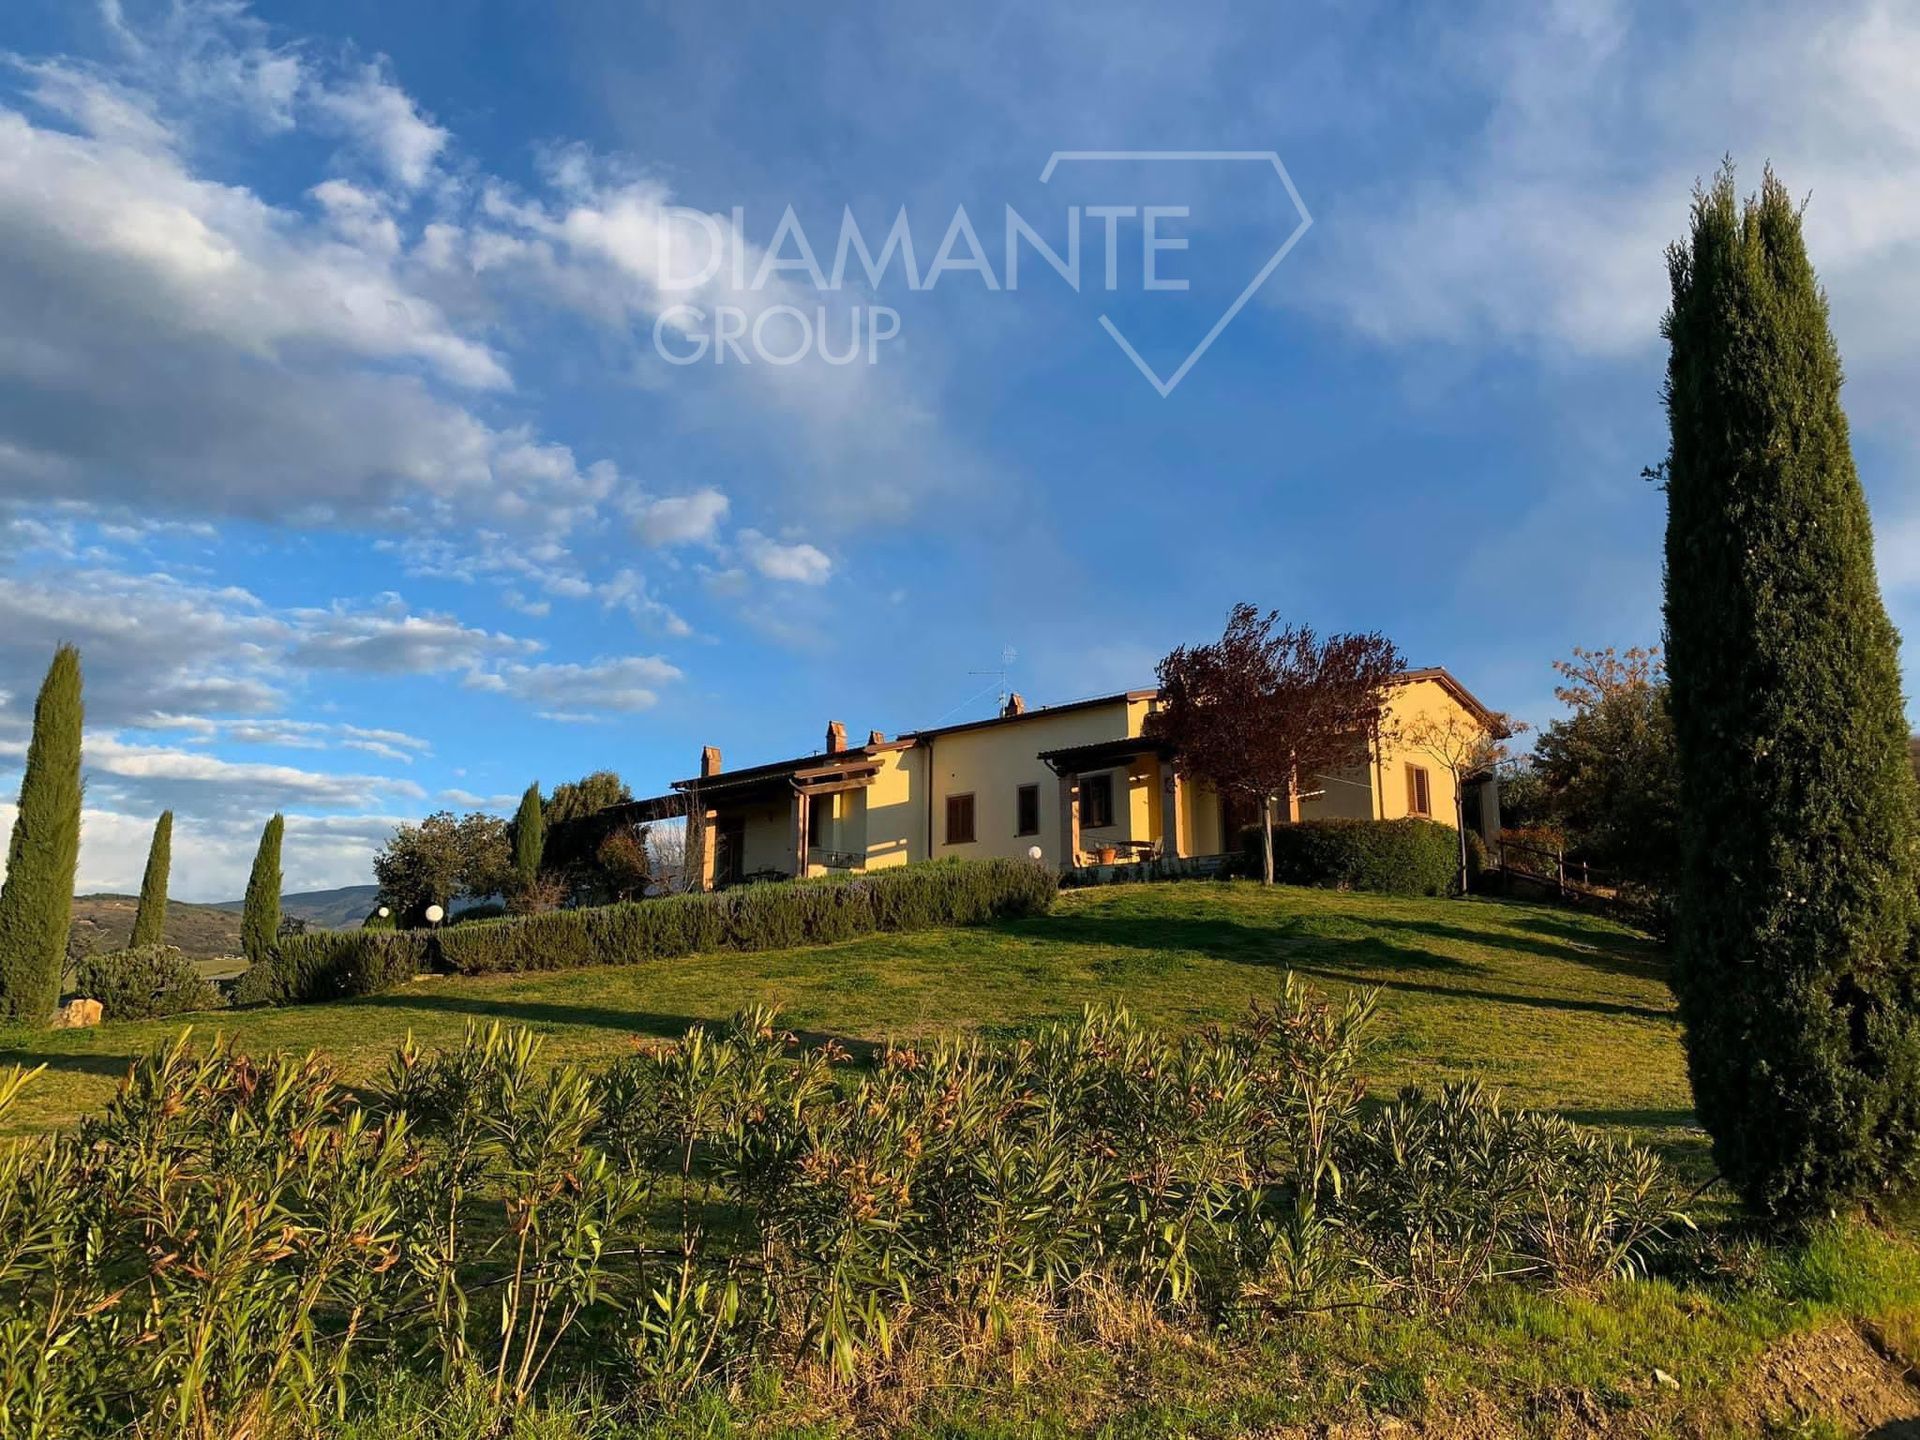 For sale cottage in quiet zone Castel del Piano Toscana